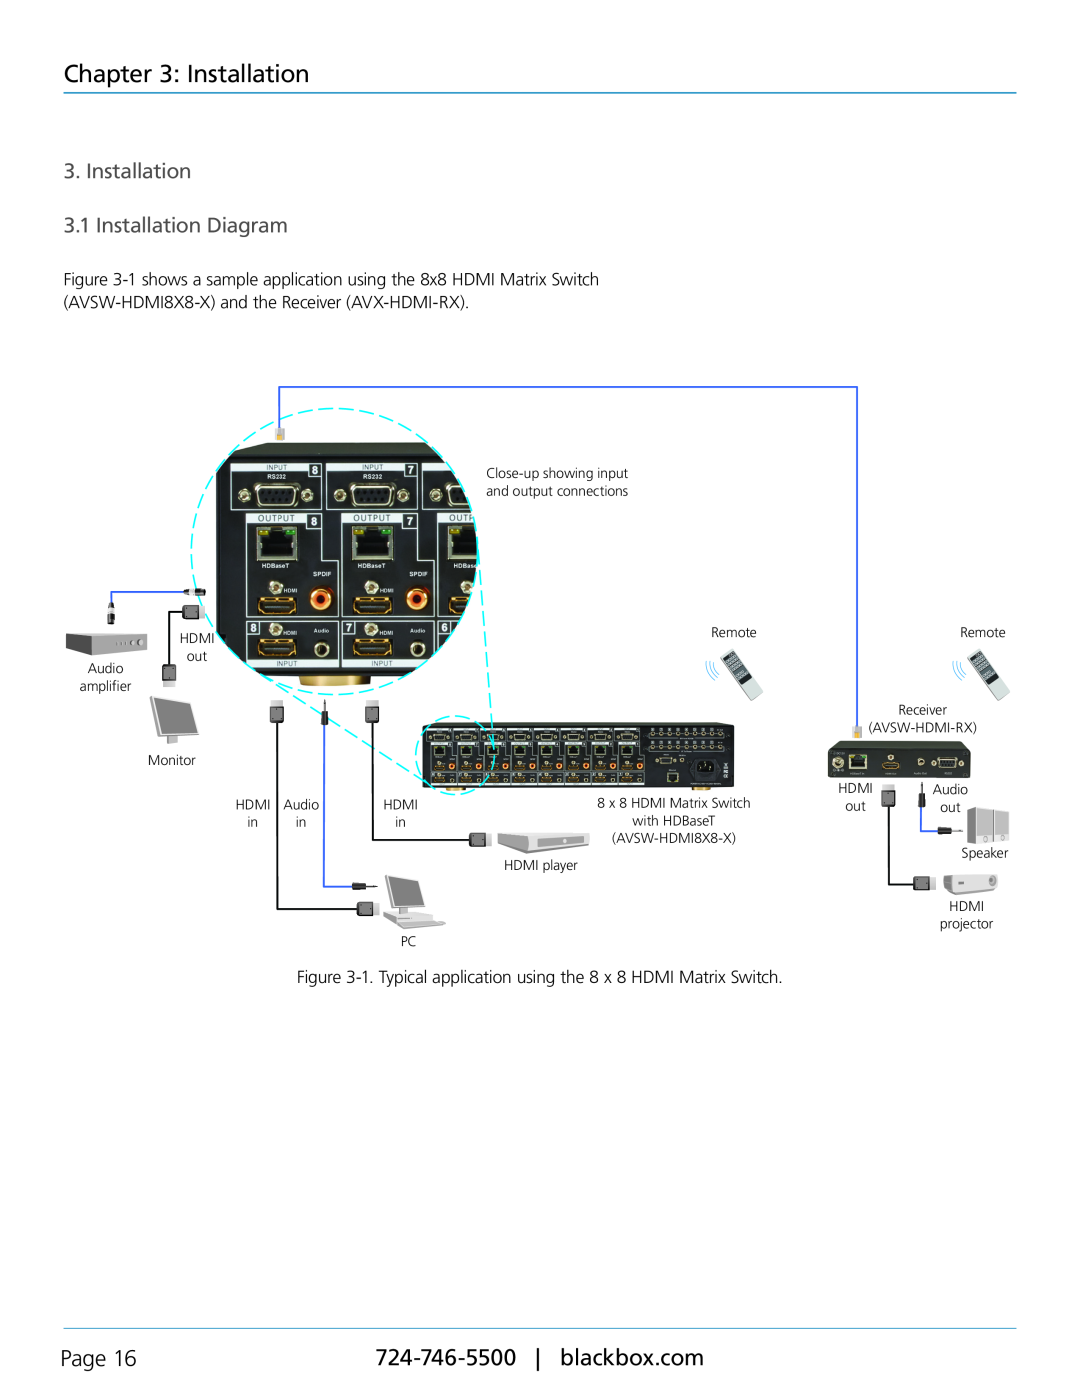 Black Box AVSW-HDMI-RX, AVSW-HDMI8X8-X manual Installation 3.1 Installation Diagram, Page 